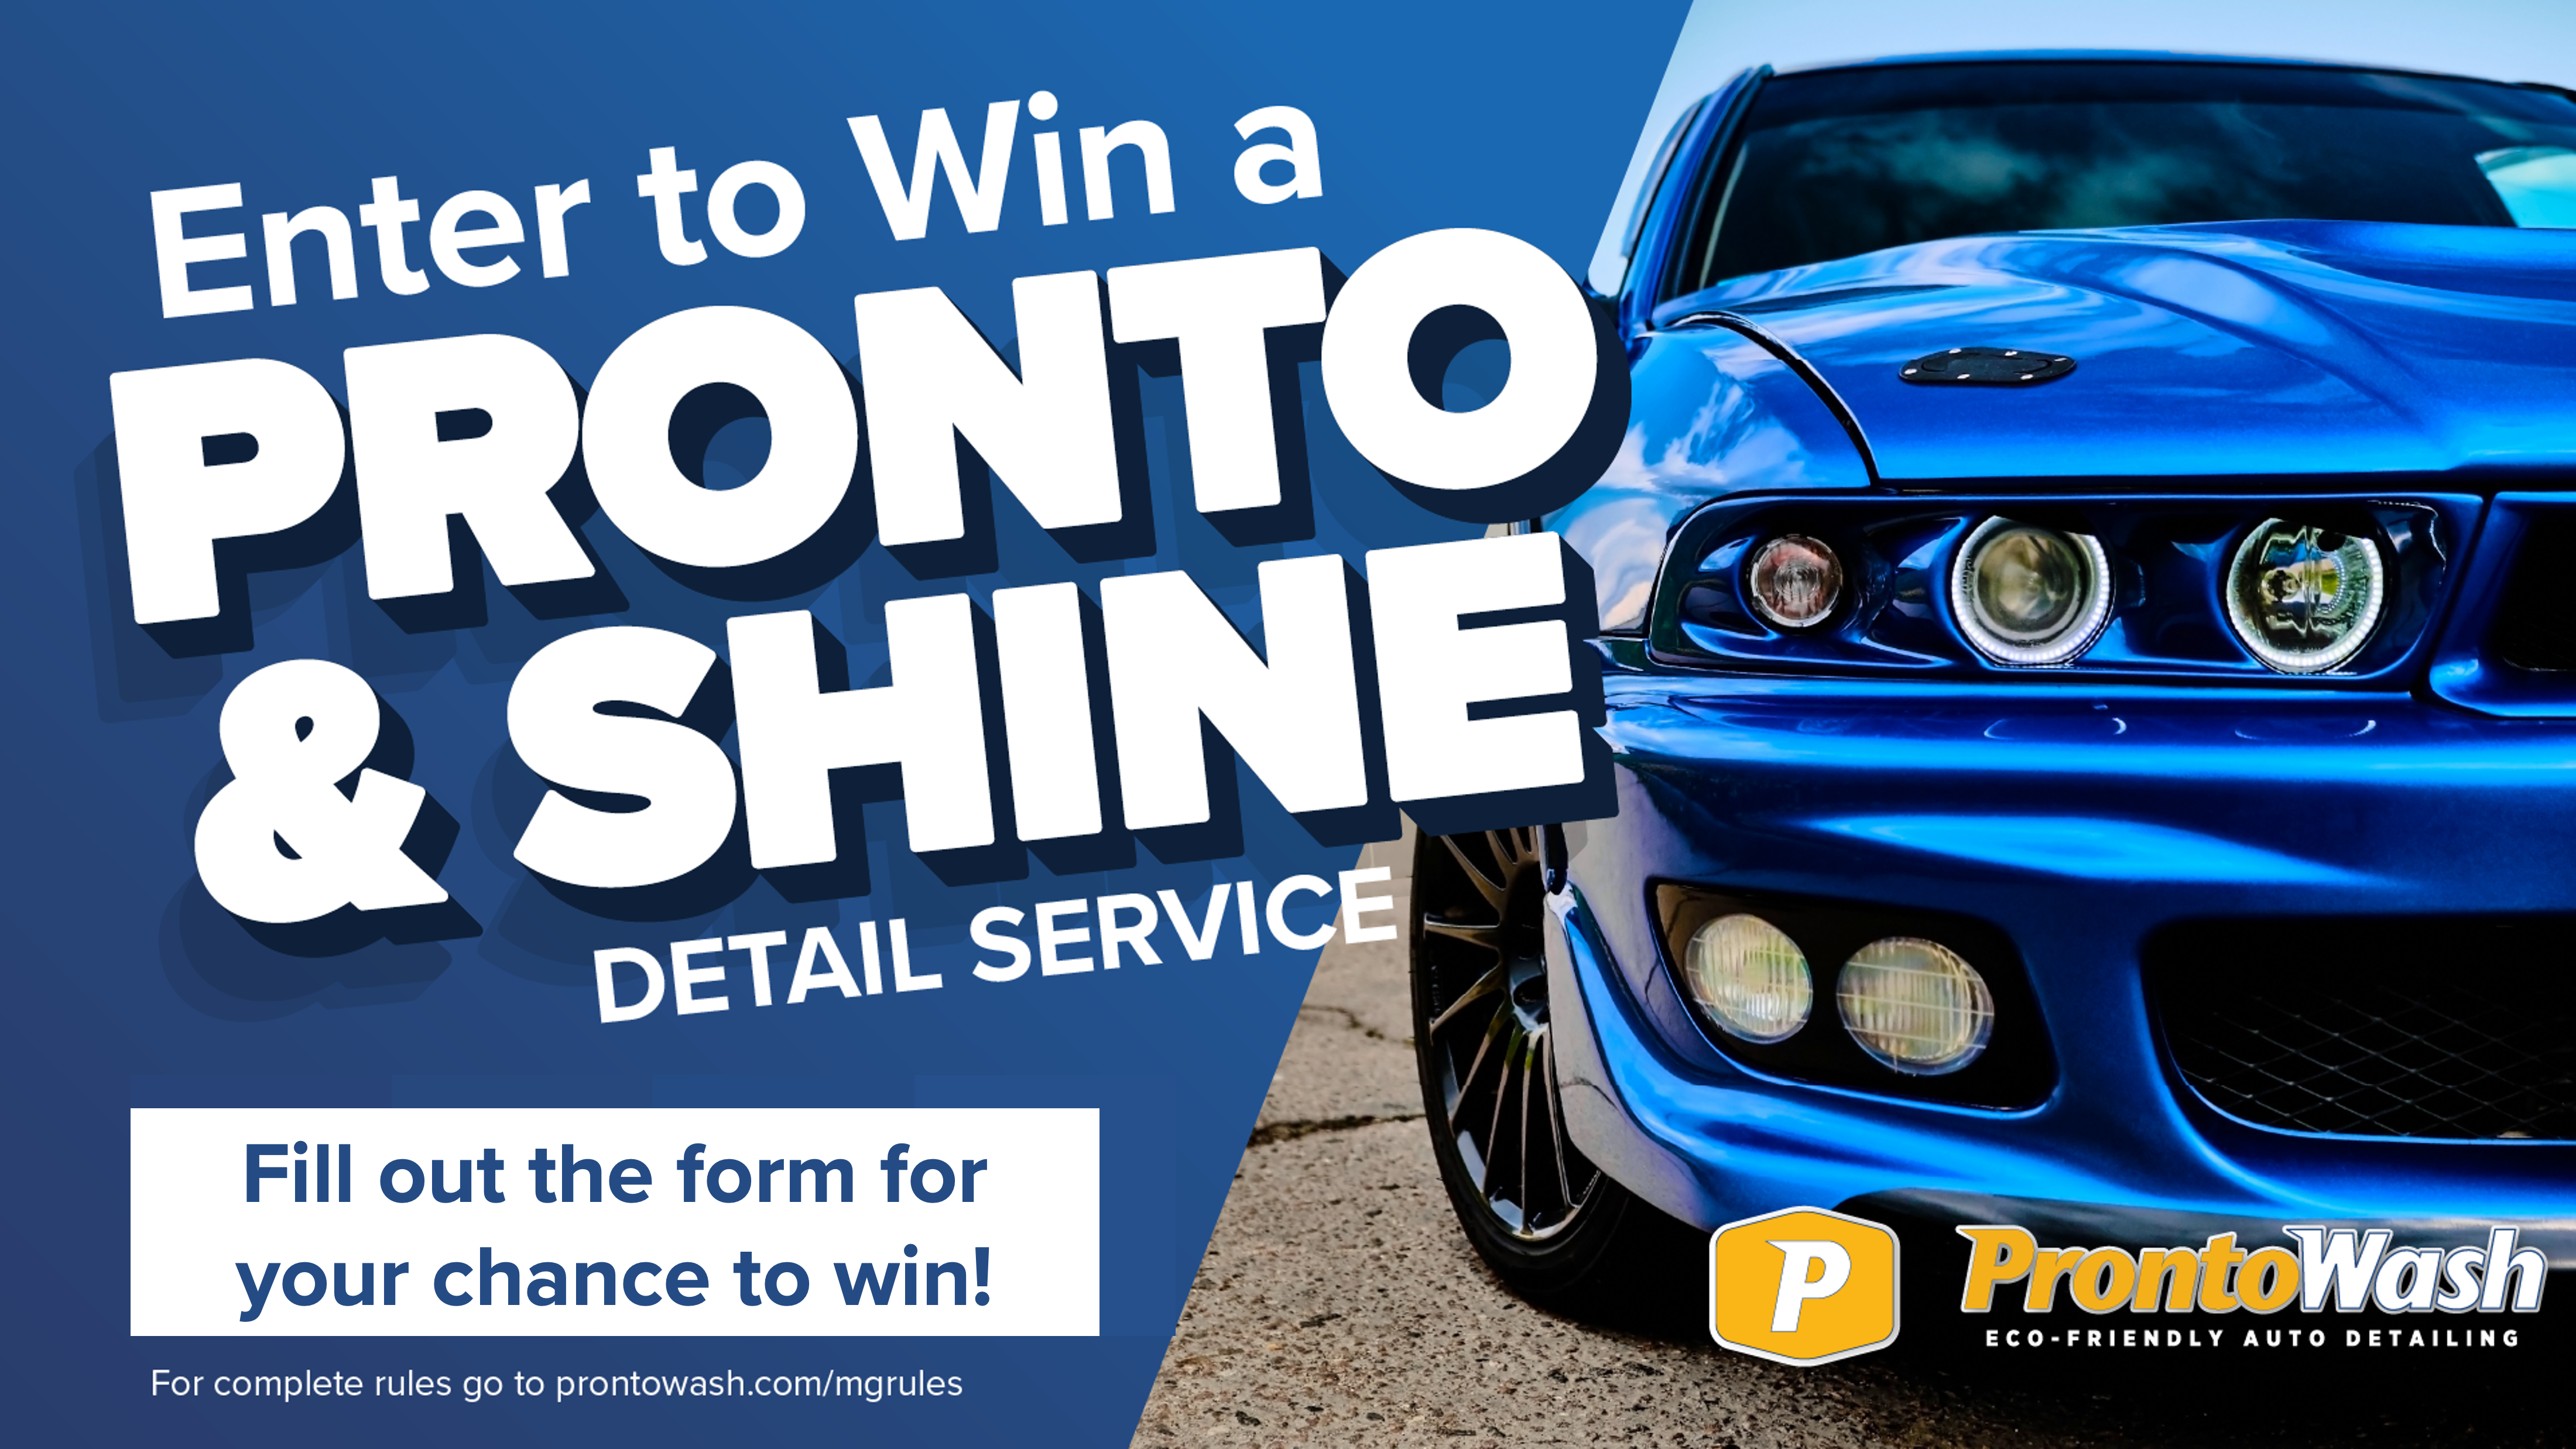 Enter To Win a Pronto & Shine detailing service